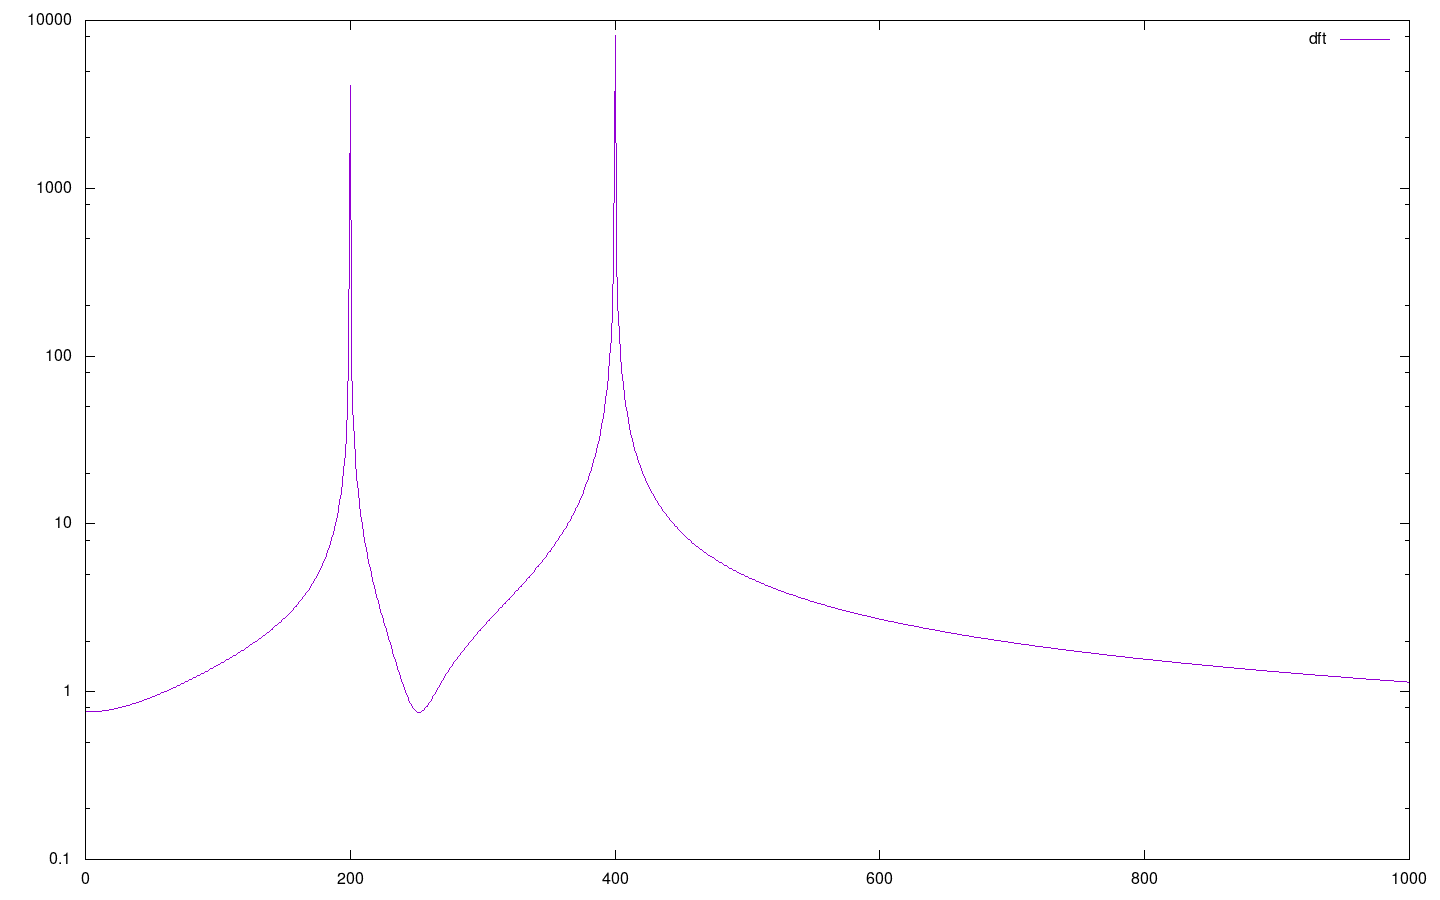 plot discrete Fourier transform of f1 function